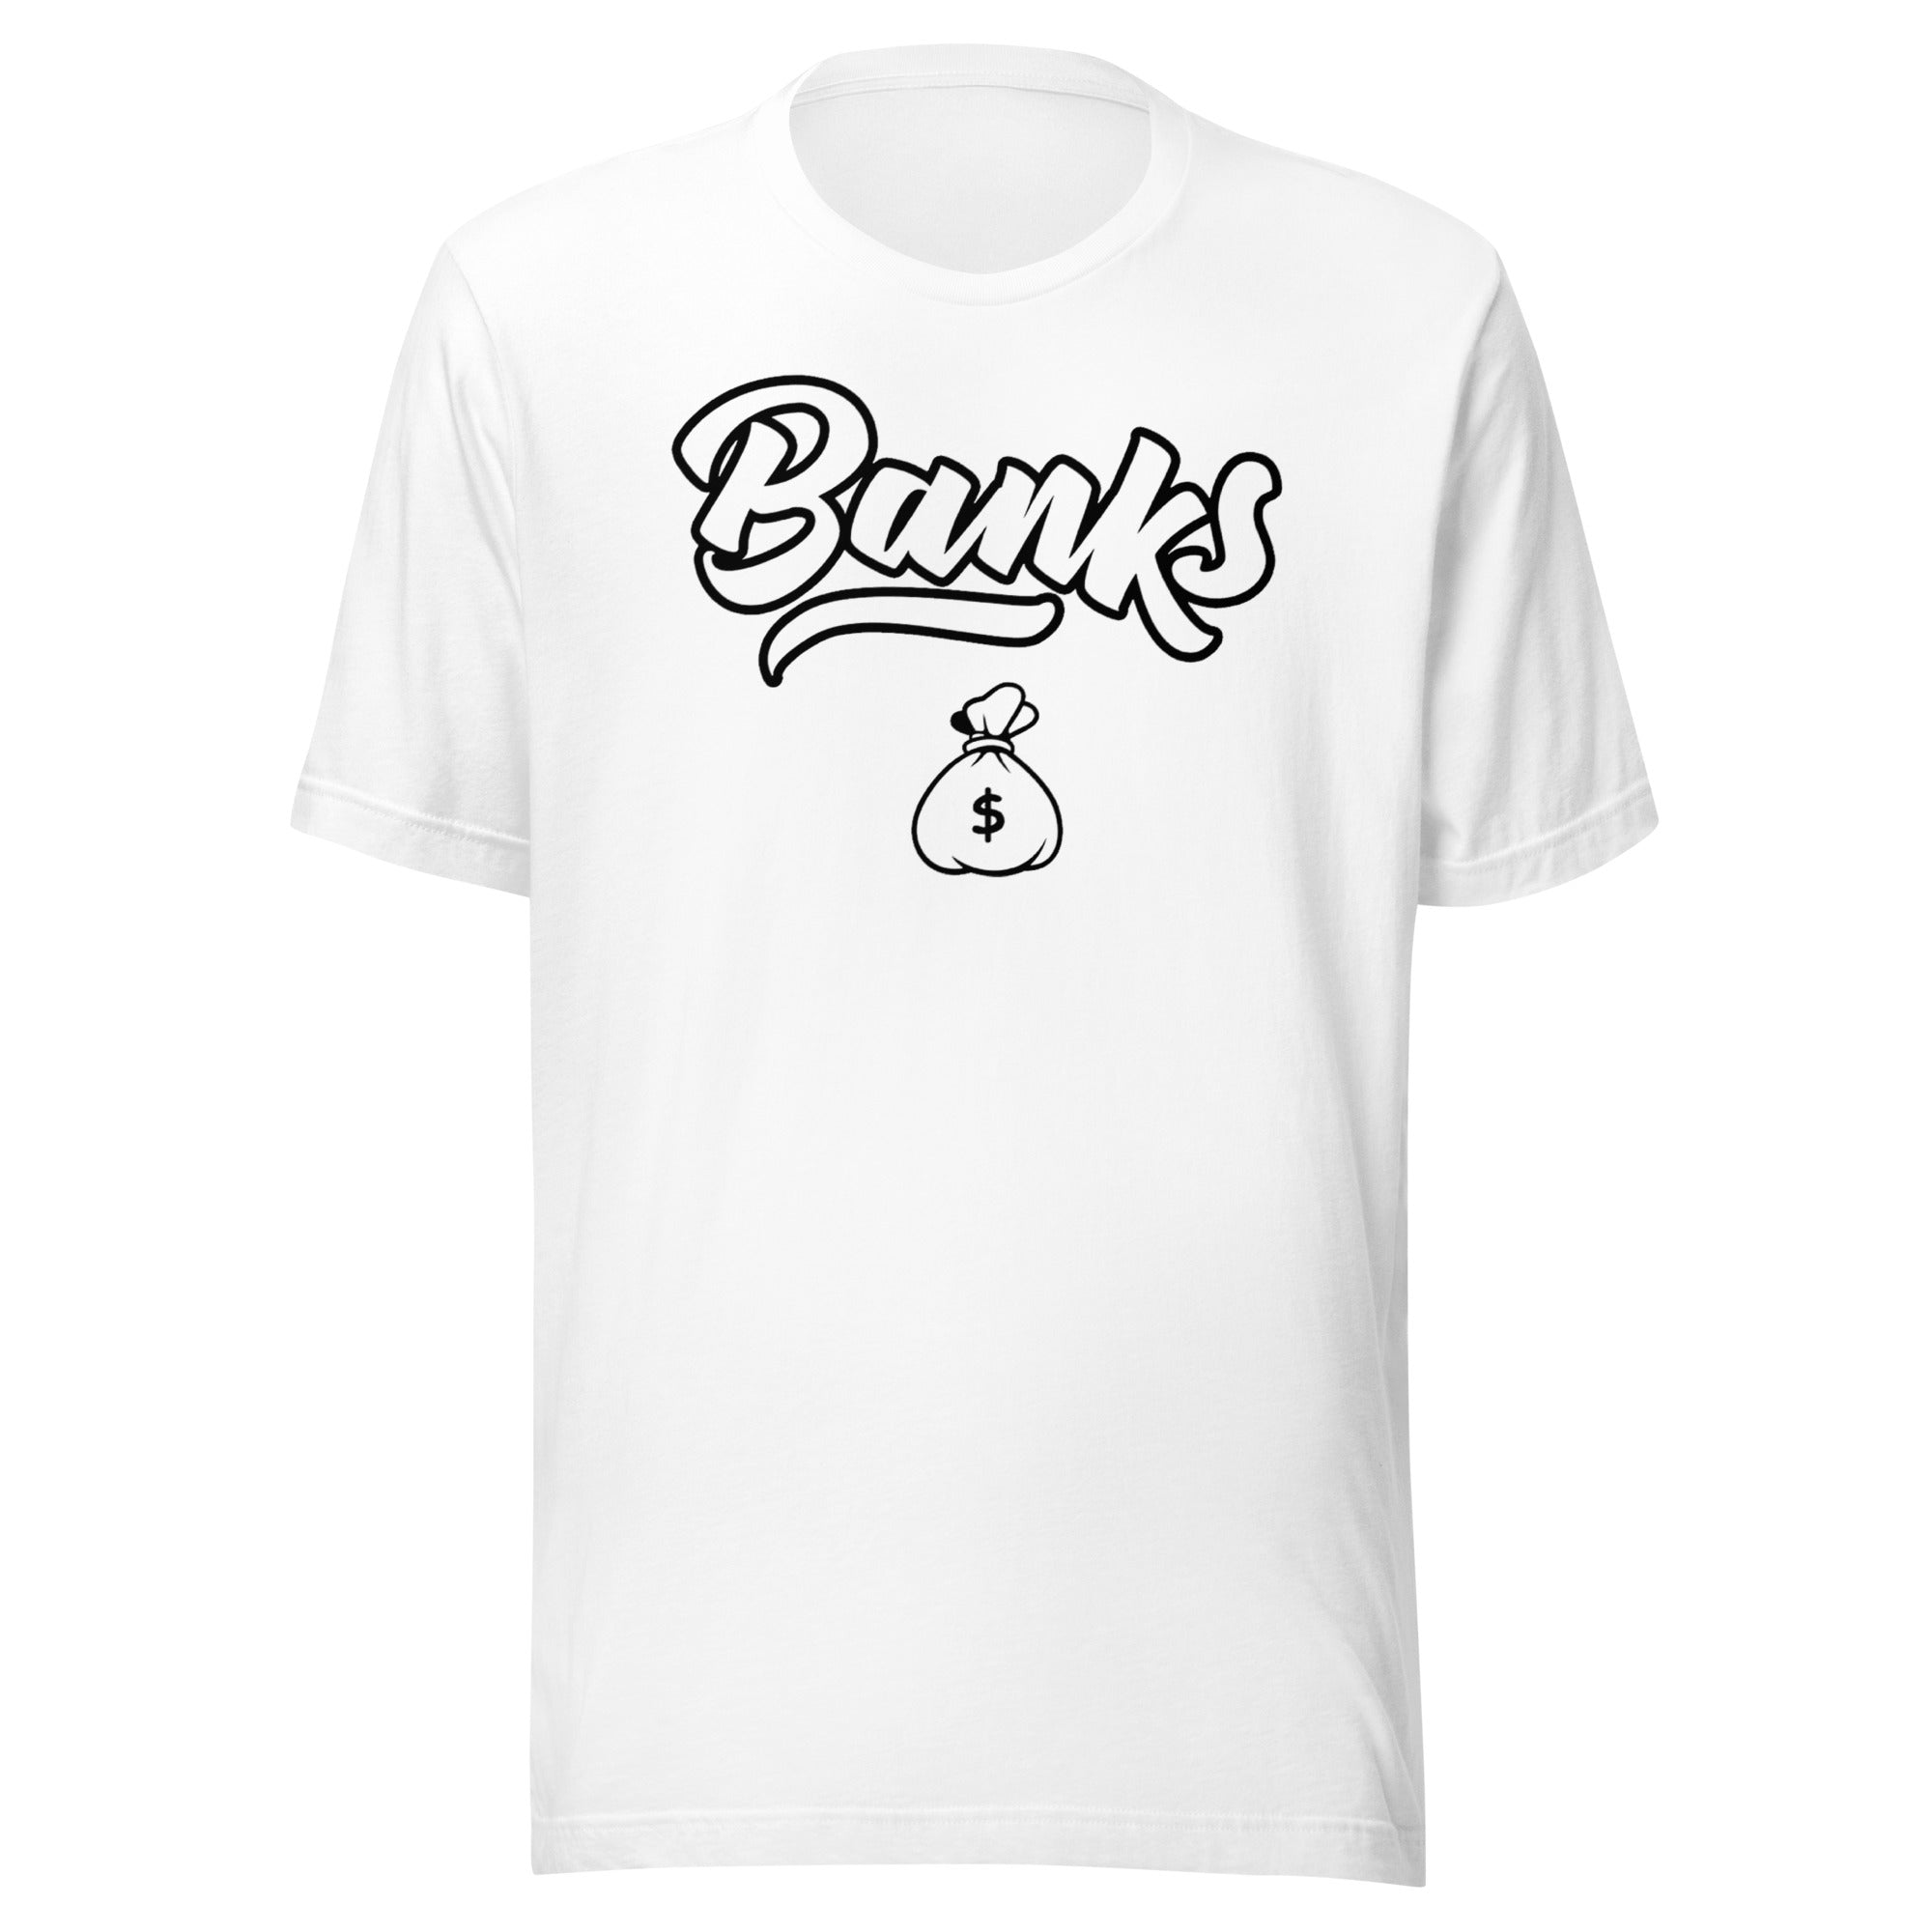 Banks 1433 - t-shirt